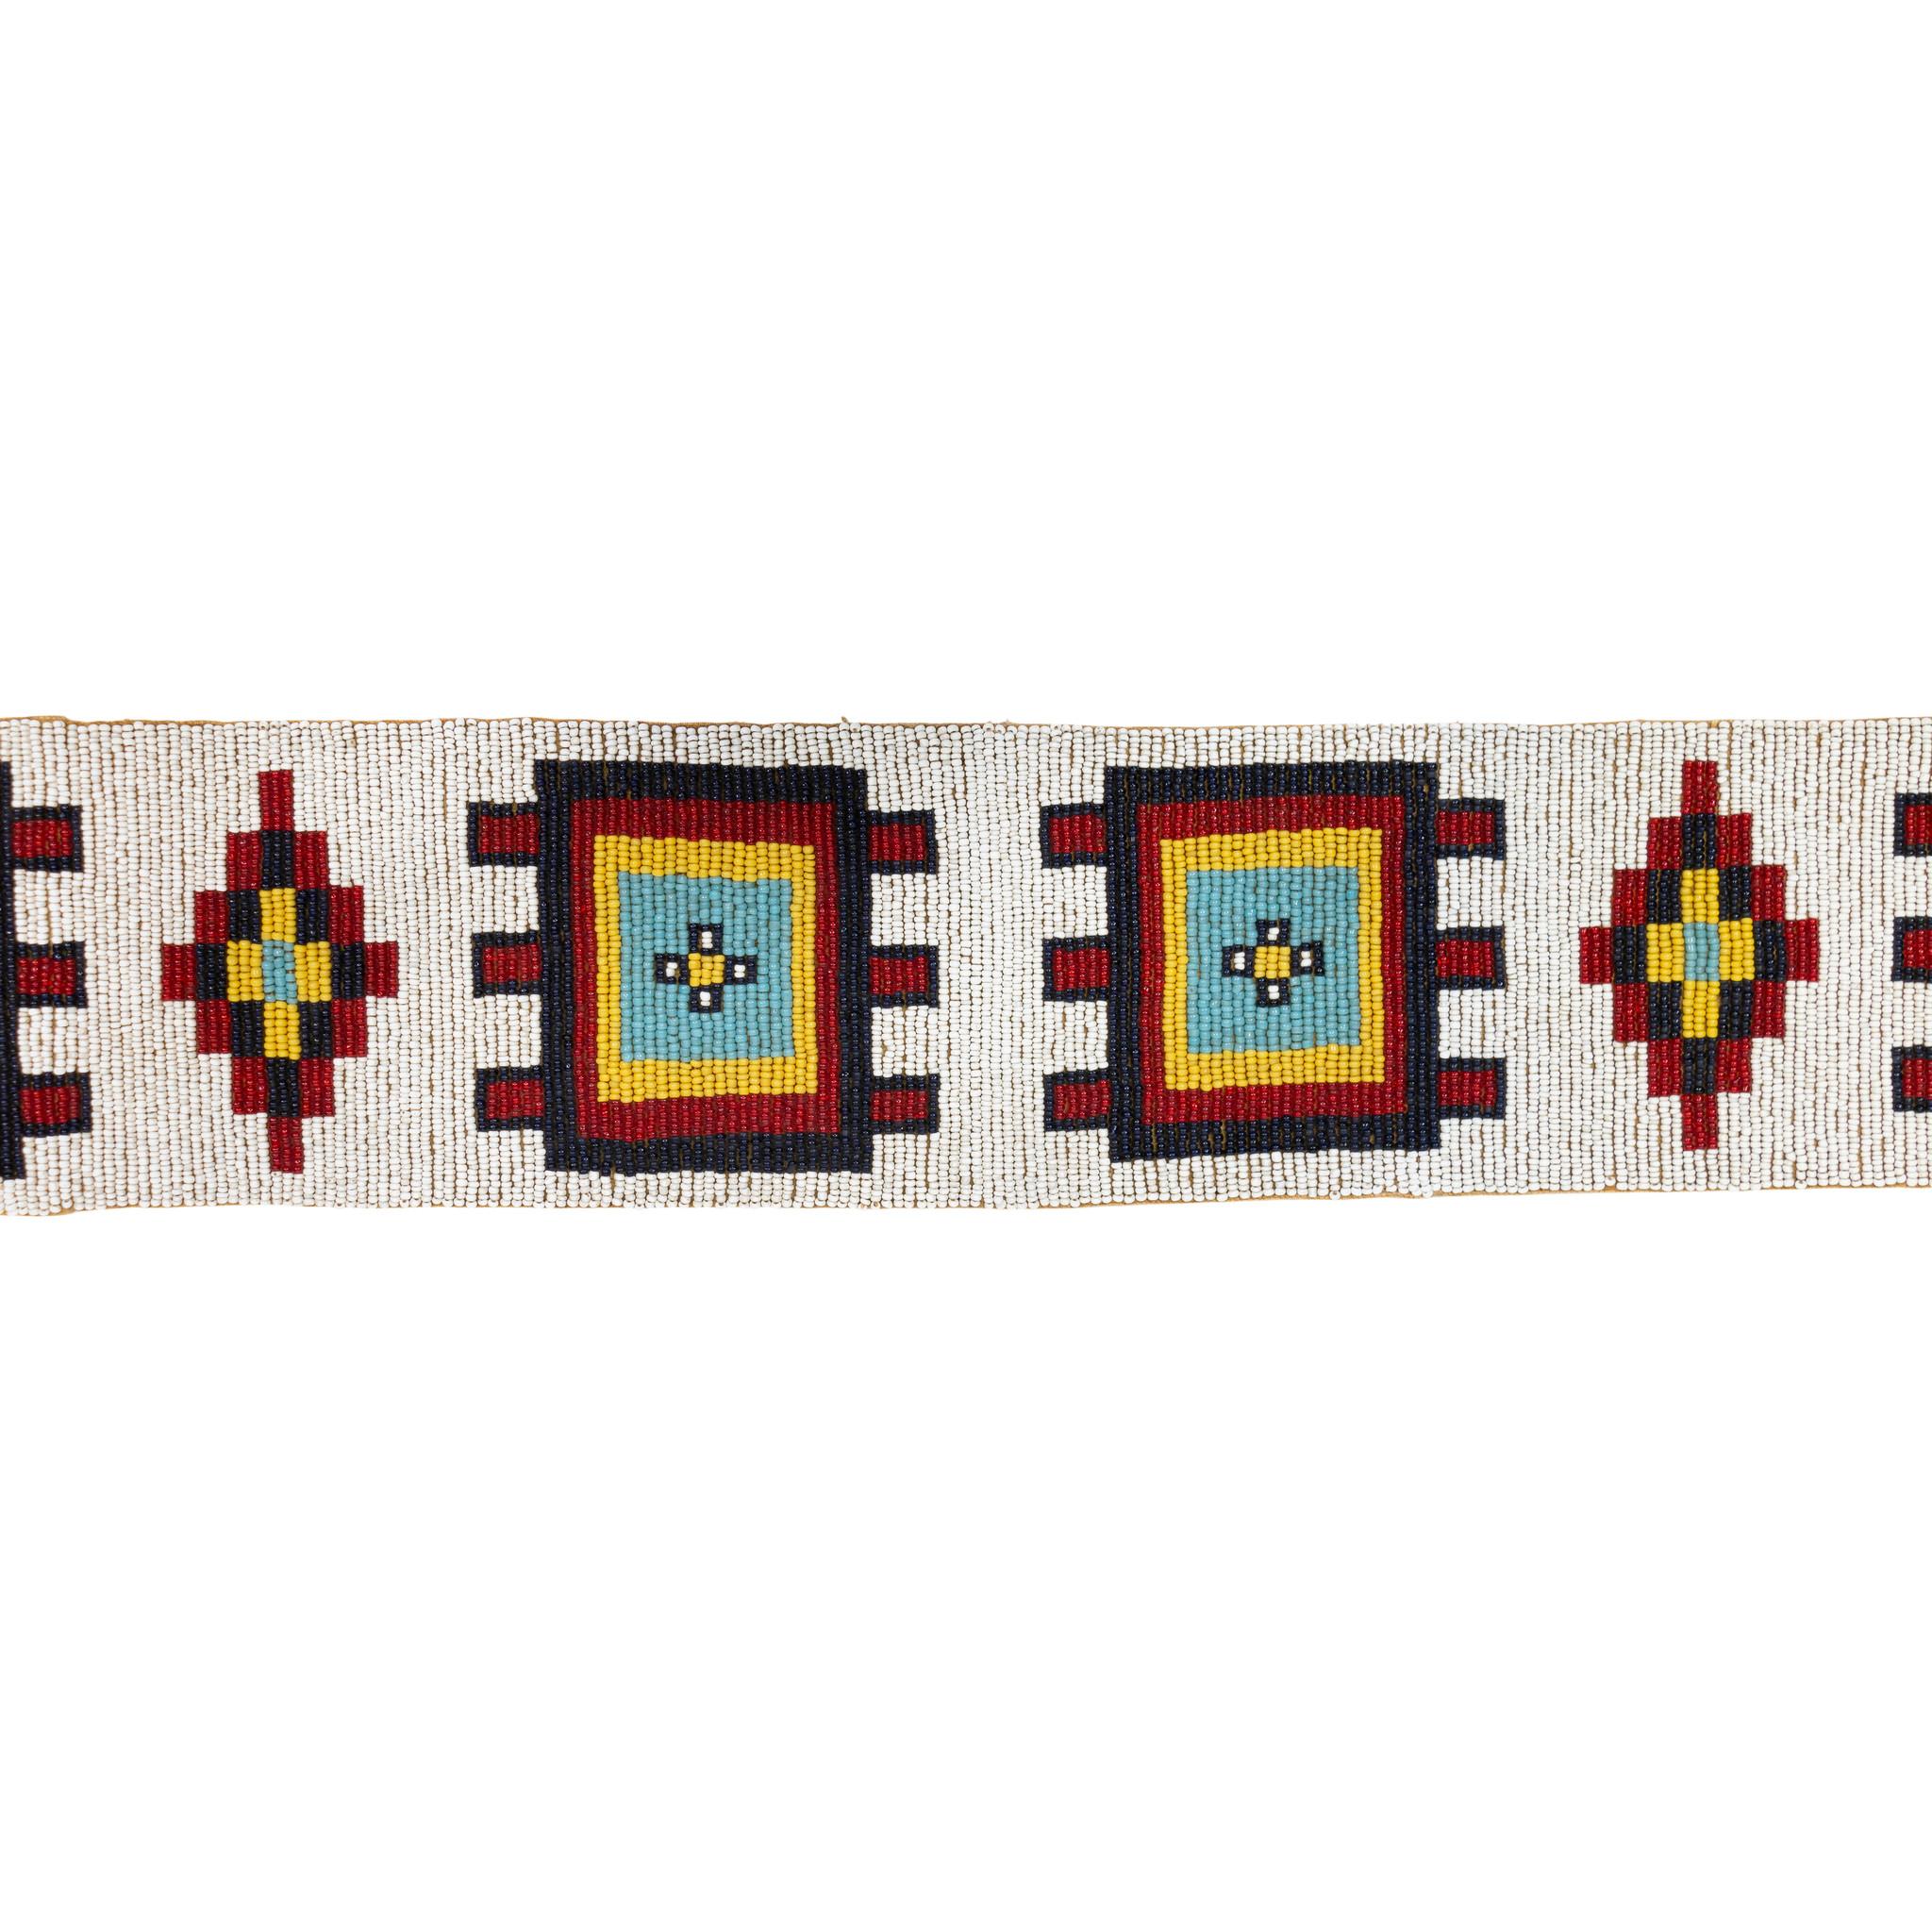 Blackfeet bead strip. Sewn on tent canvas with geometric design. Not sure if belt or blanket strip. Great collector piece.

Period: circa 1990
Origin: Blackfeet
Size: 4